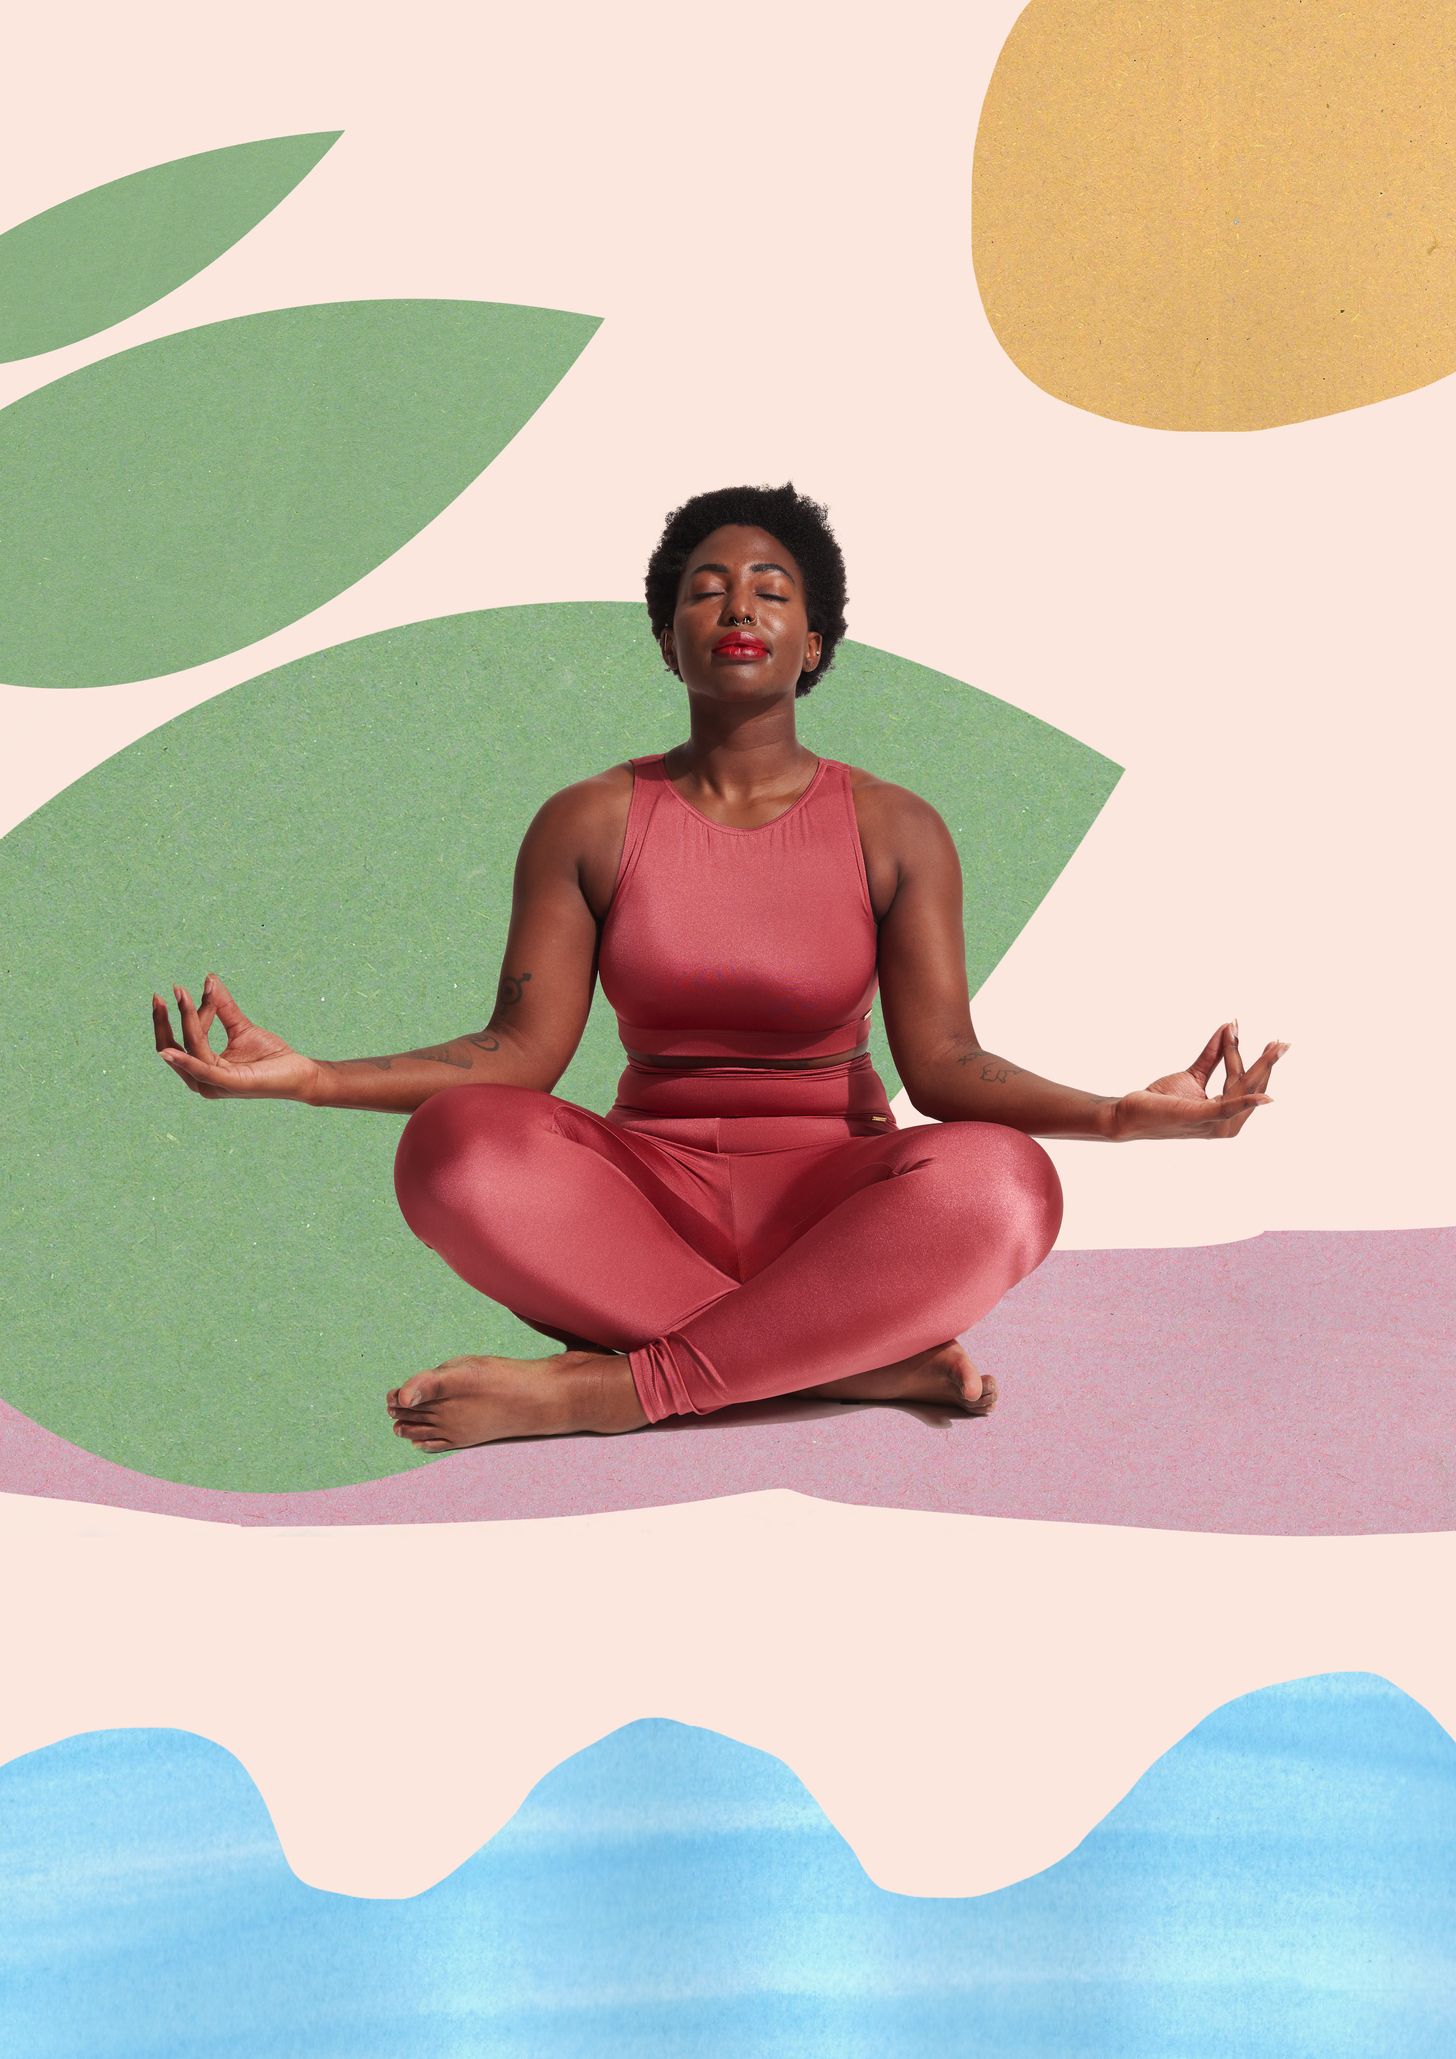 10 Terrific Benefits of a Morning Meditation Practice • Yoga Basics